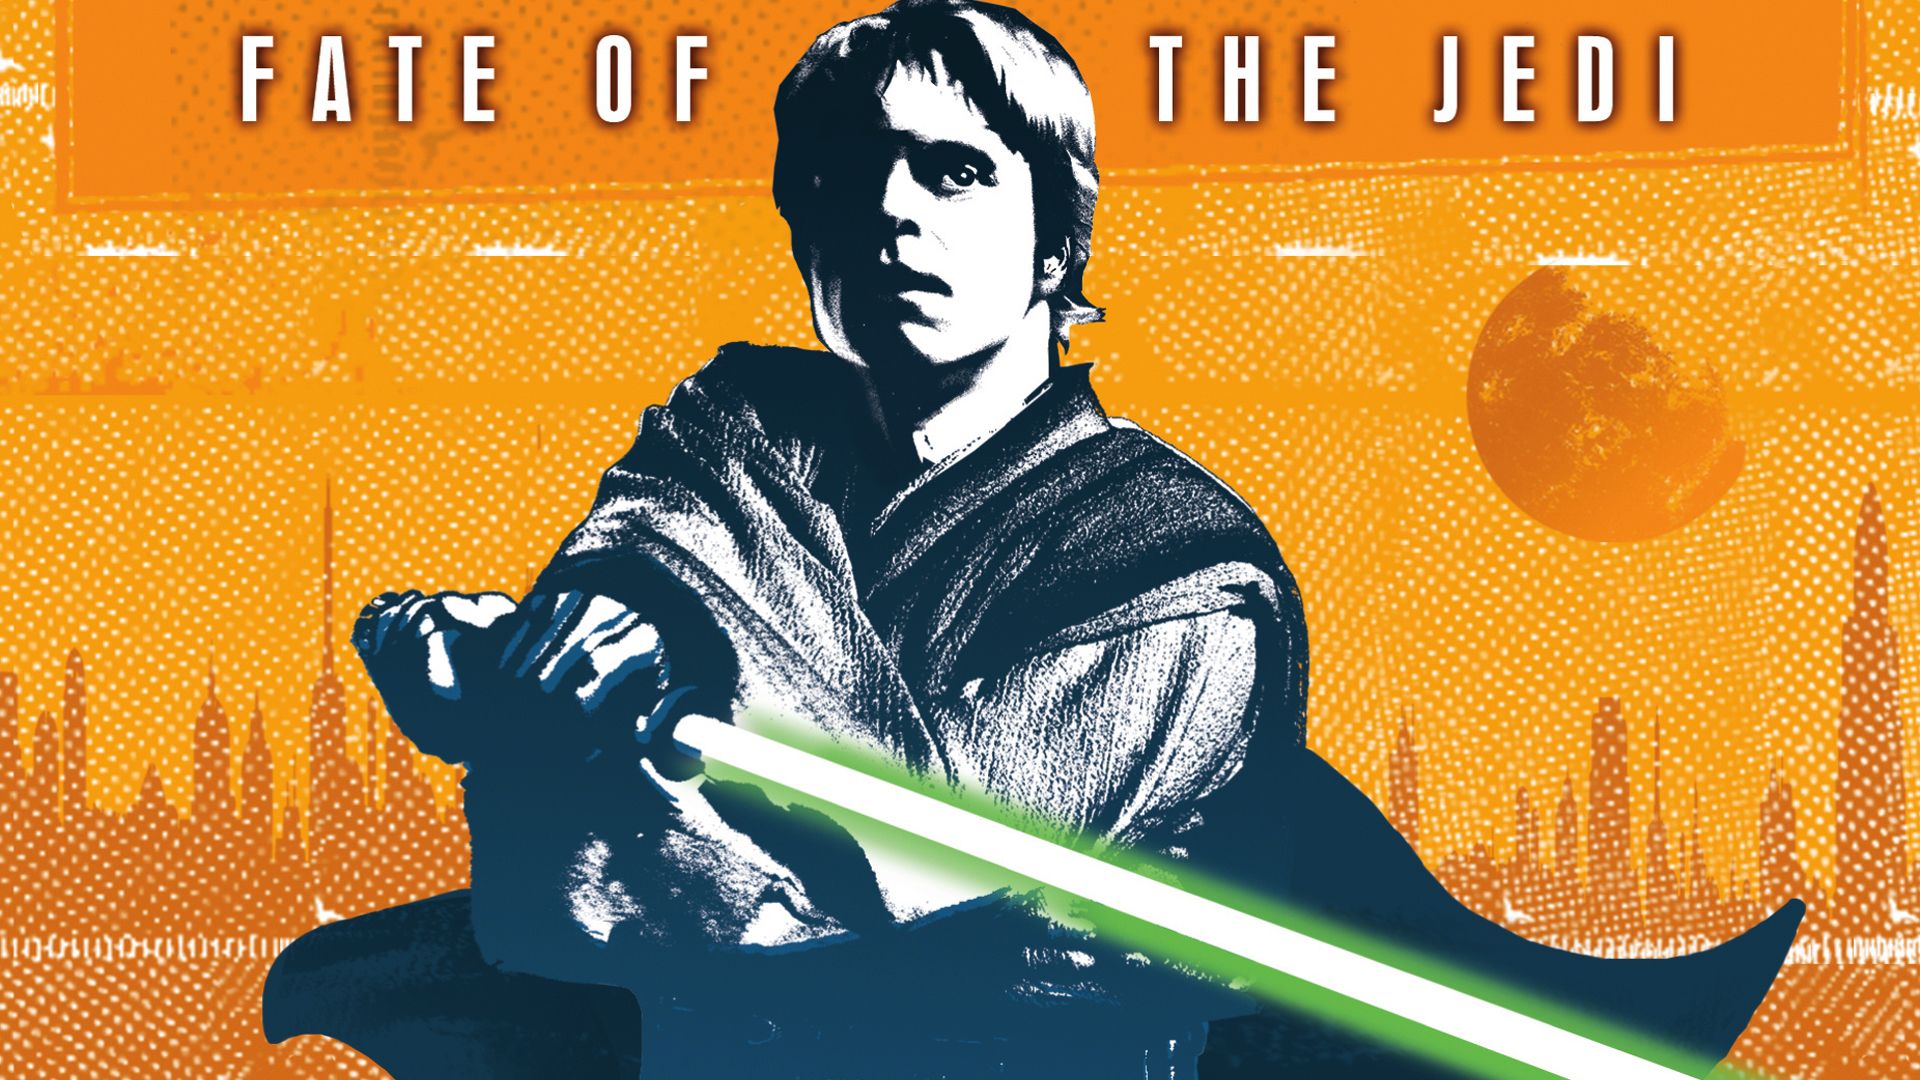 Star Wars, lightsabers, Jedi, Luke Skywalker, Mark Hamill Wallpaper / WallpaperJam.com